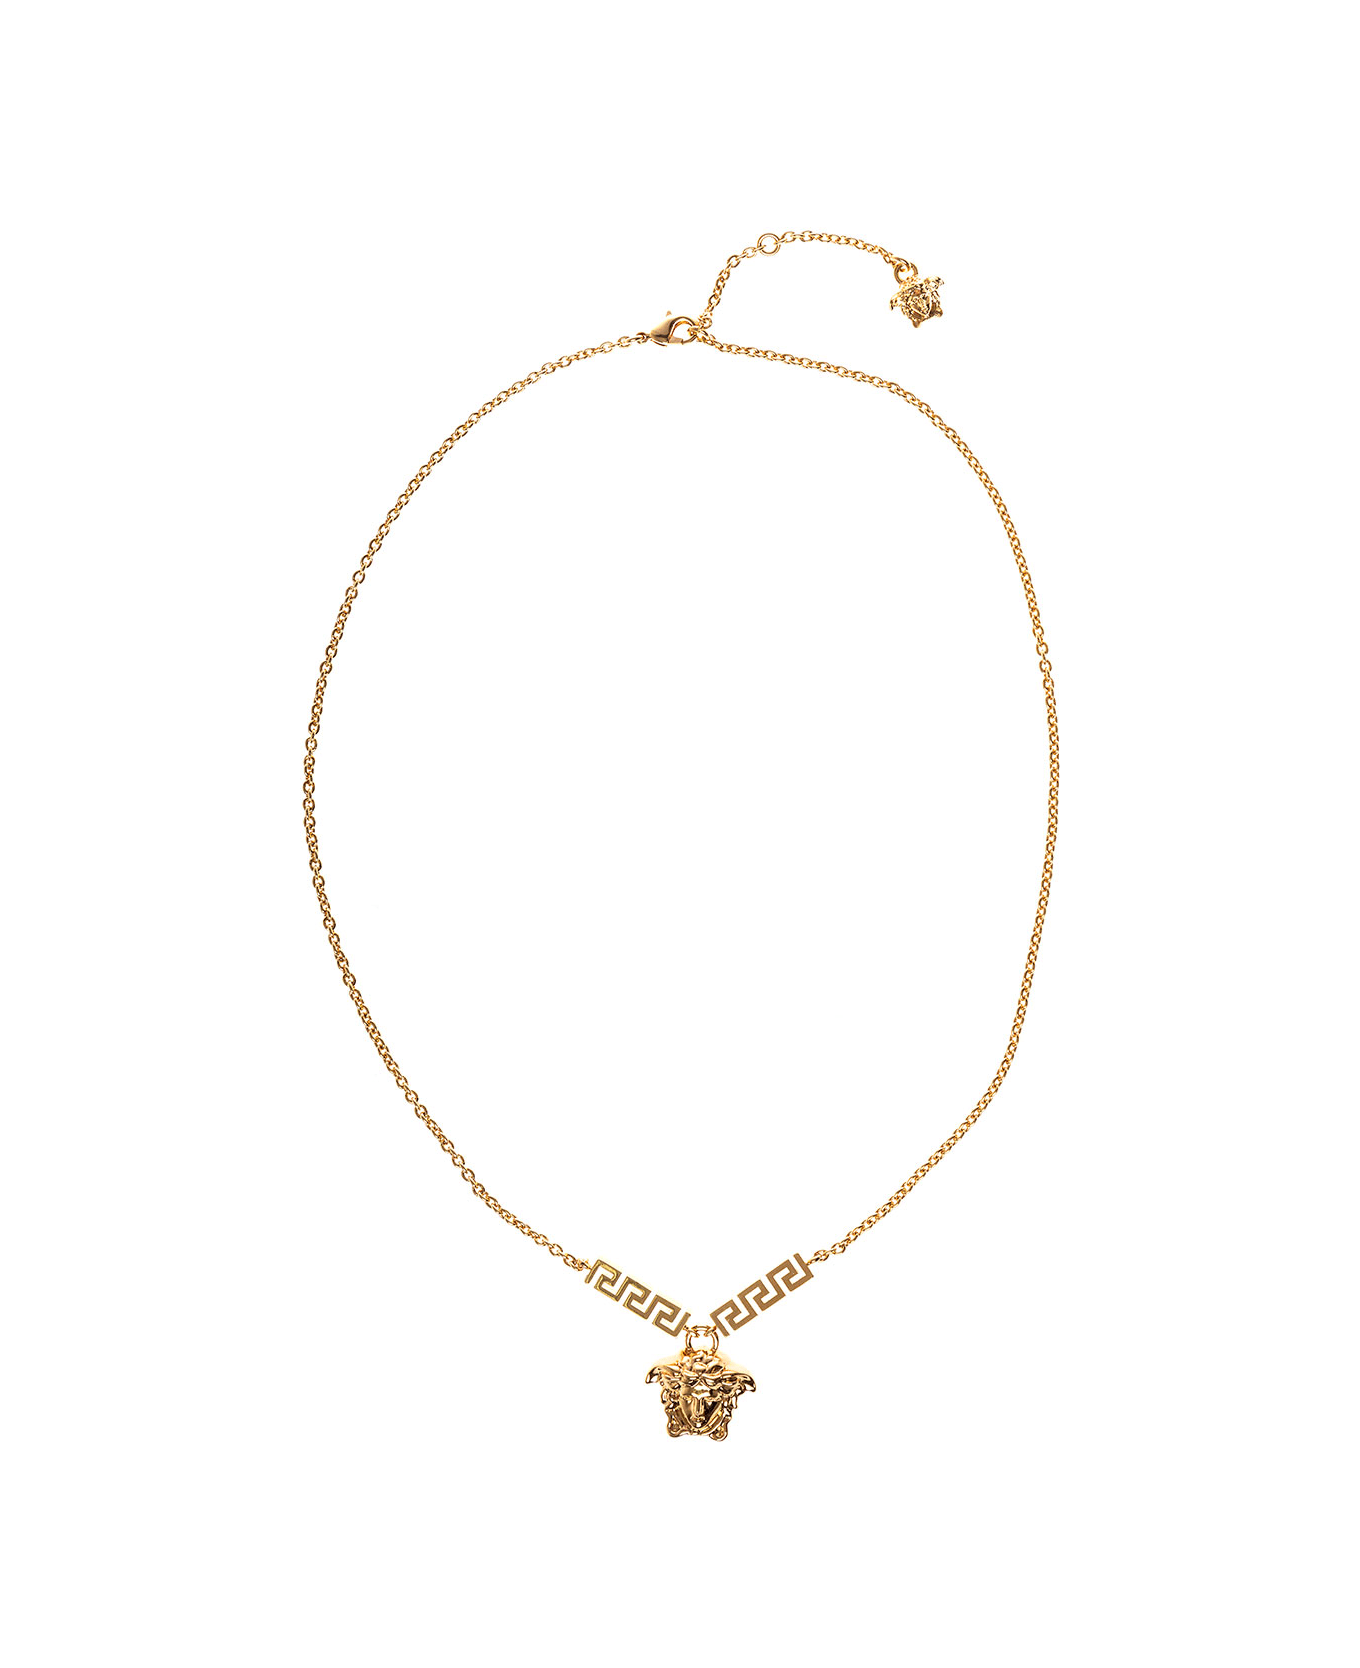 Versace Woman's Medusa Gold Metal Necklace - Metallic